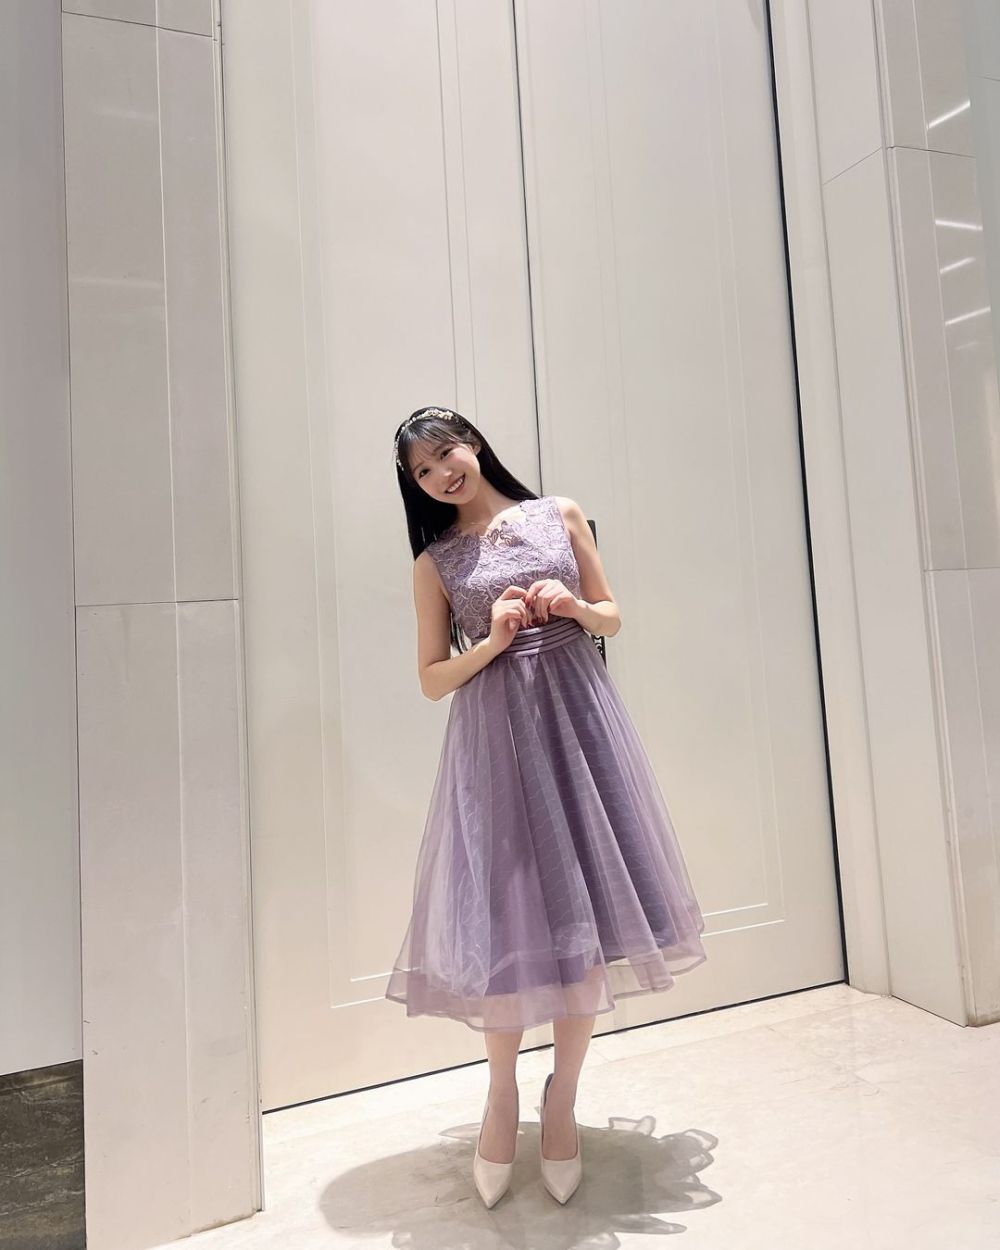 8 Inspirasi Outfit Dress ala Eks NMB48 Sumire Yokono, Gorgeous!